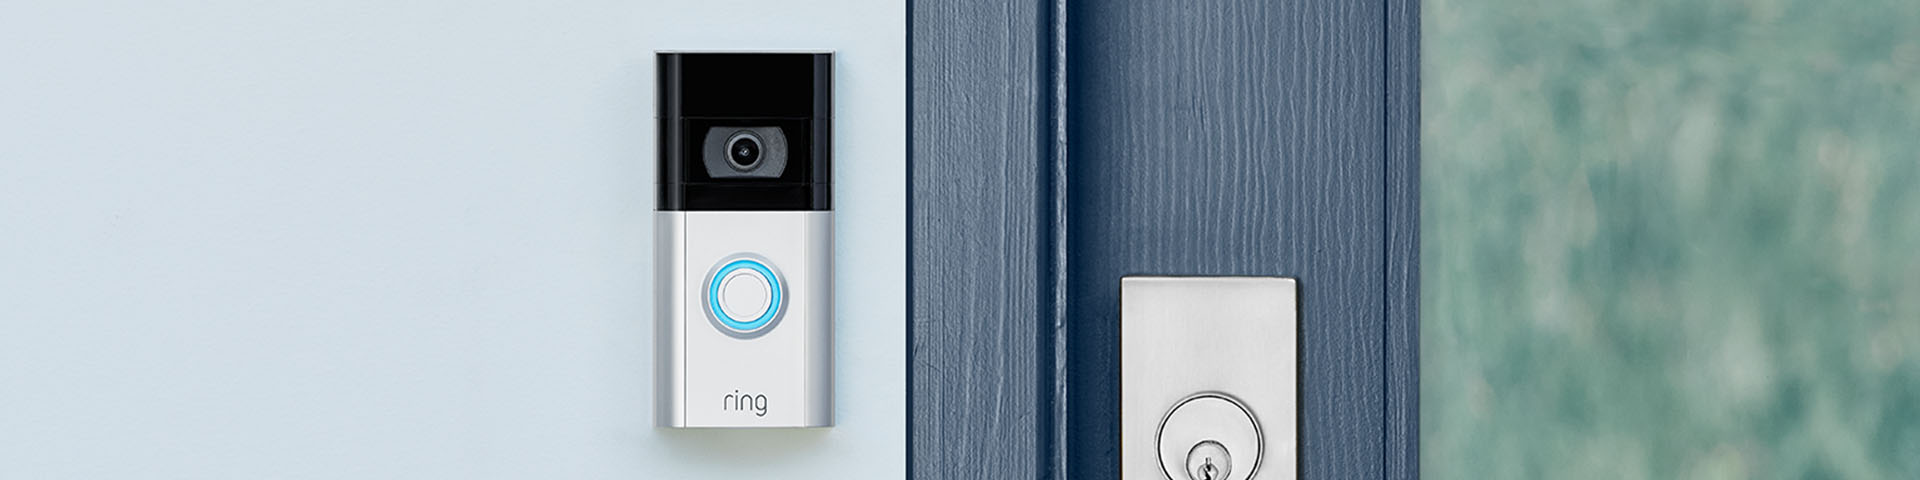 Ring Video Doorbell - Complete Beginners Guide 